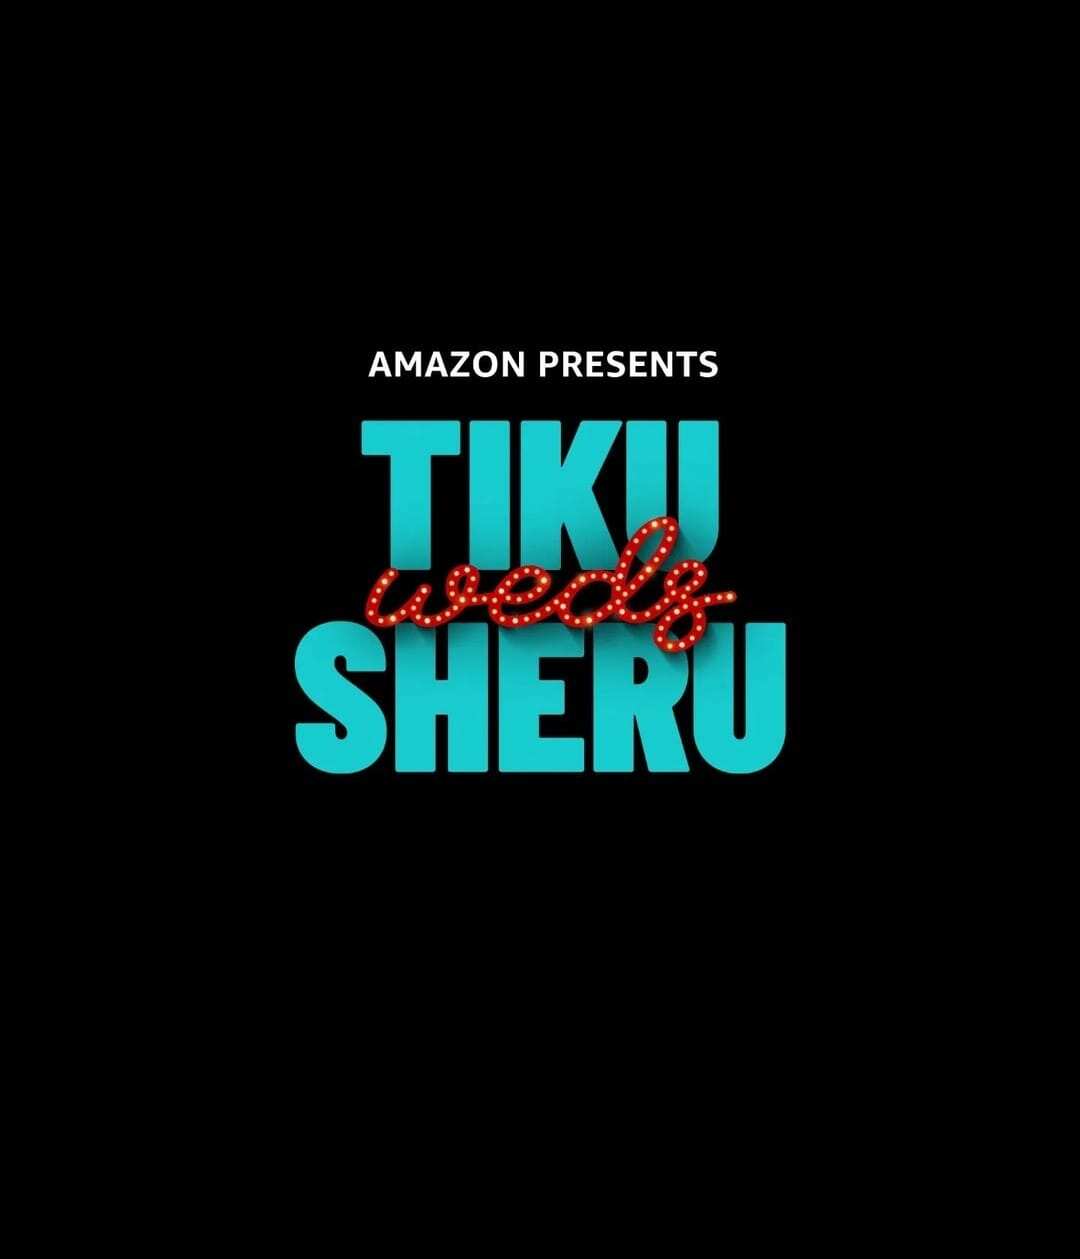 Tiku Weds Sheru (Special Collaboration)